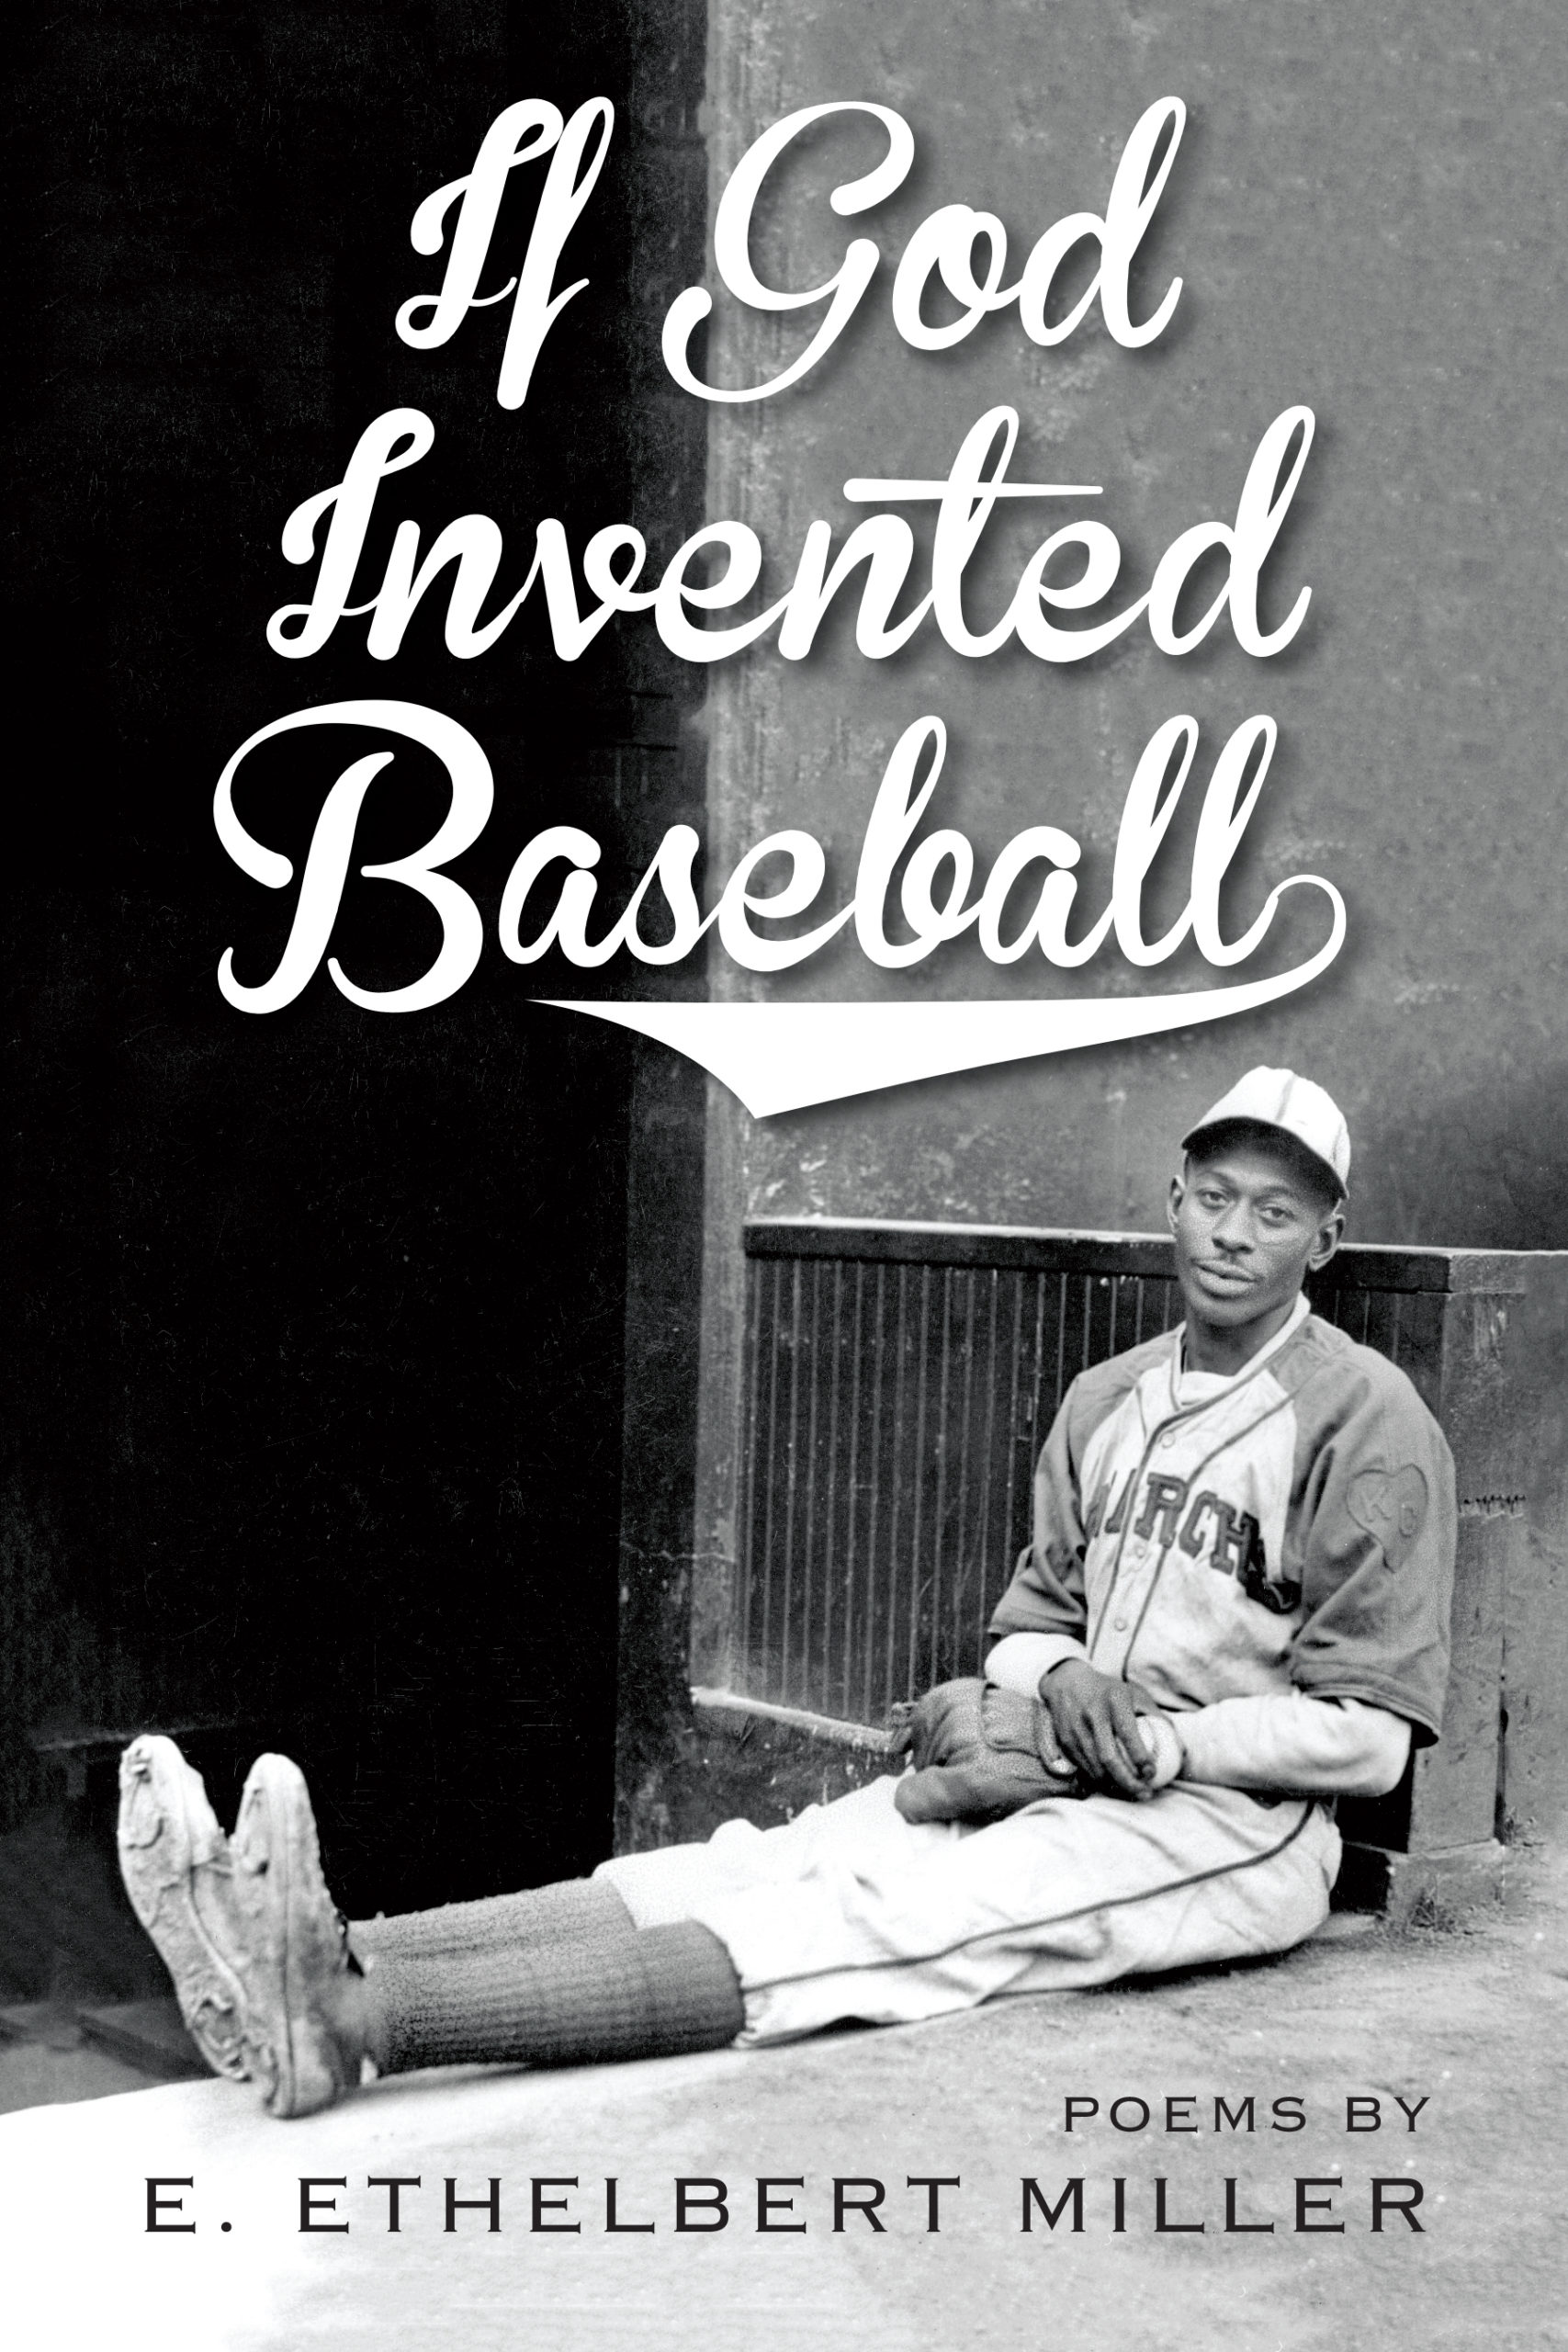 Who Really Invented Baseball?